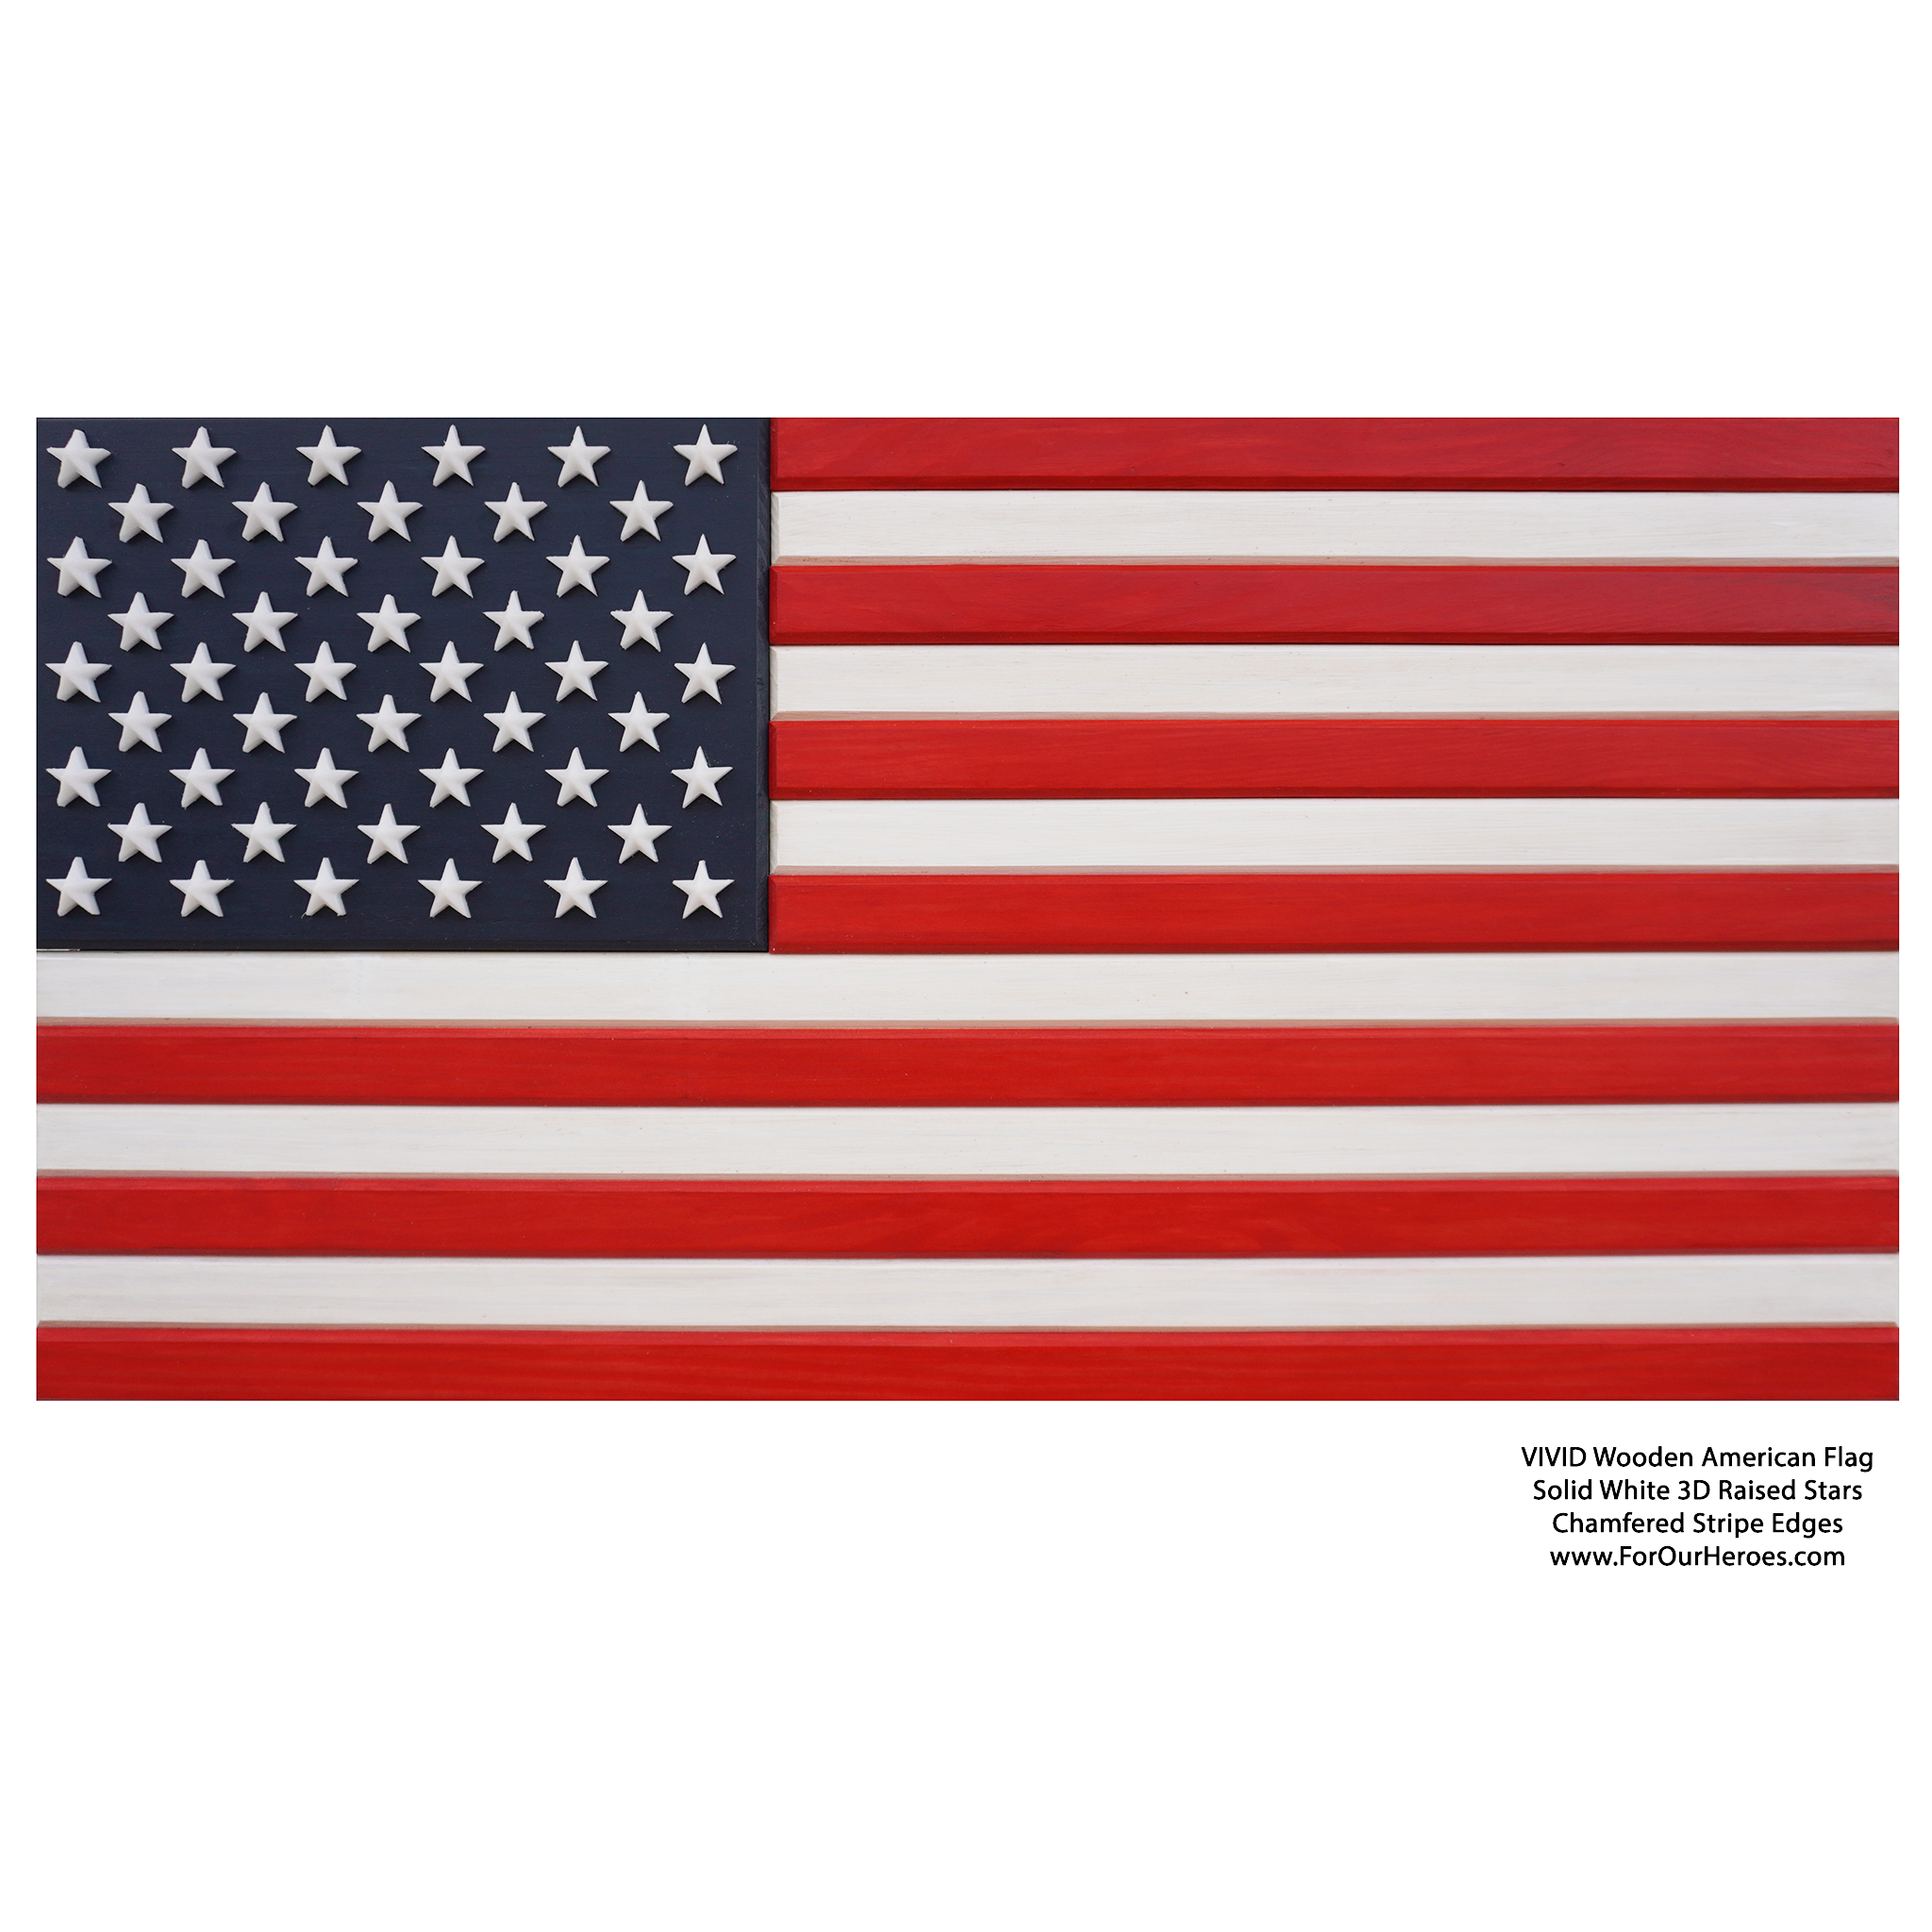 2D VIVID American Flag - 0